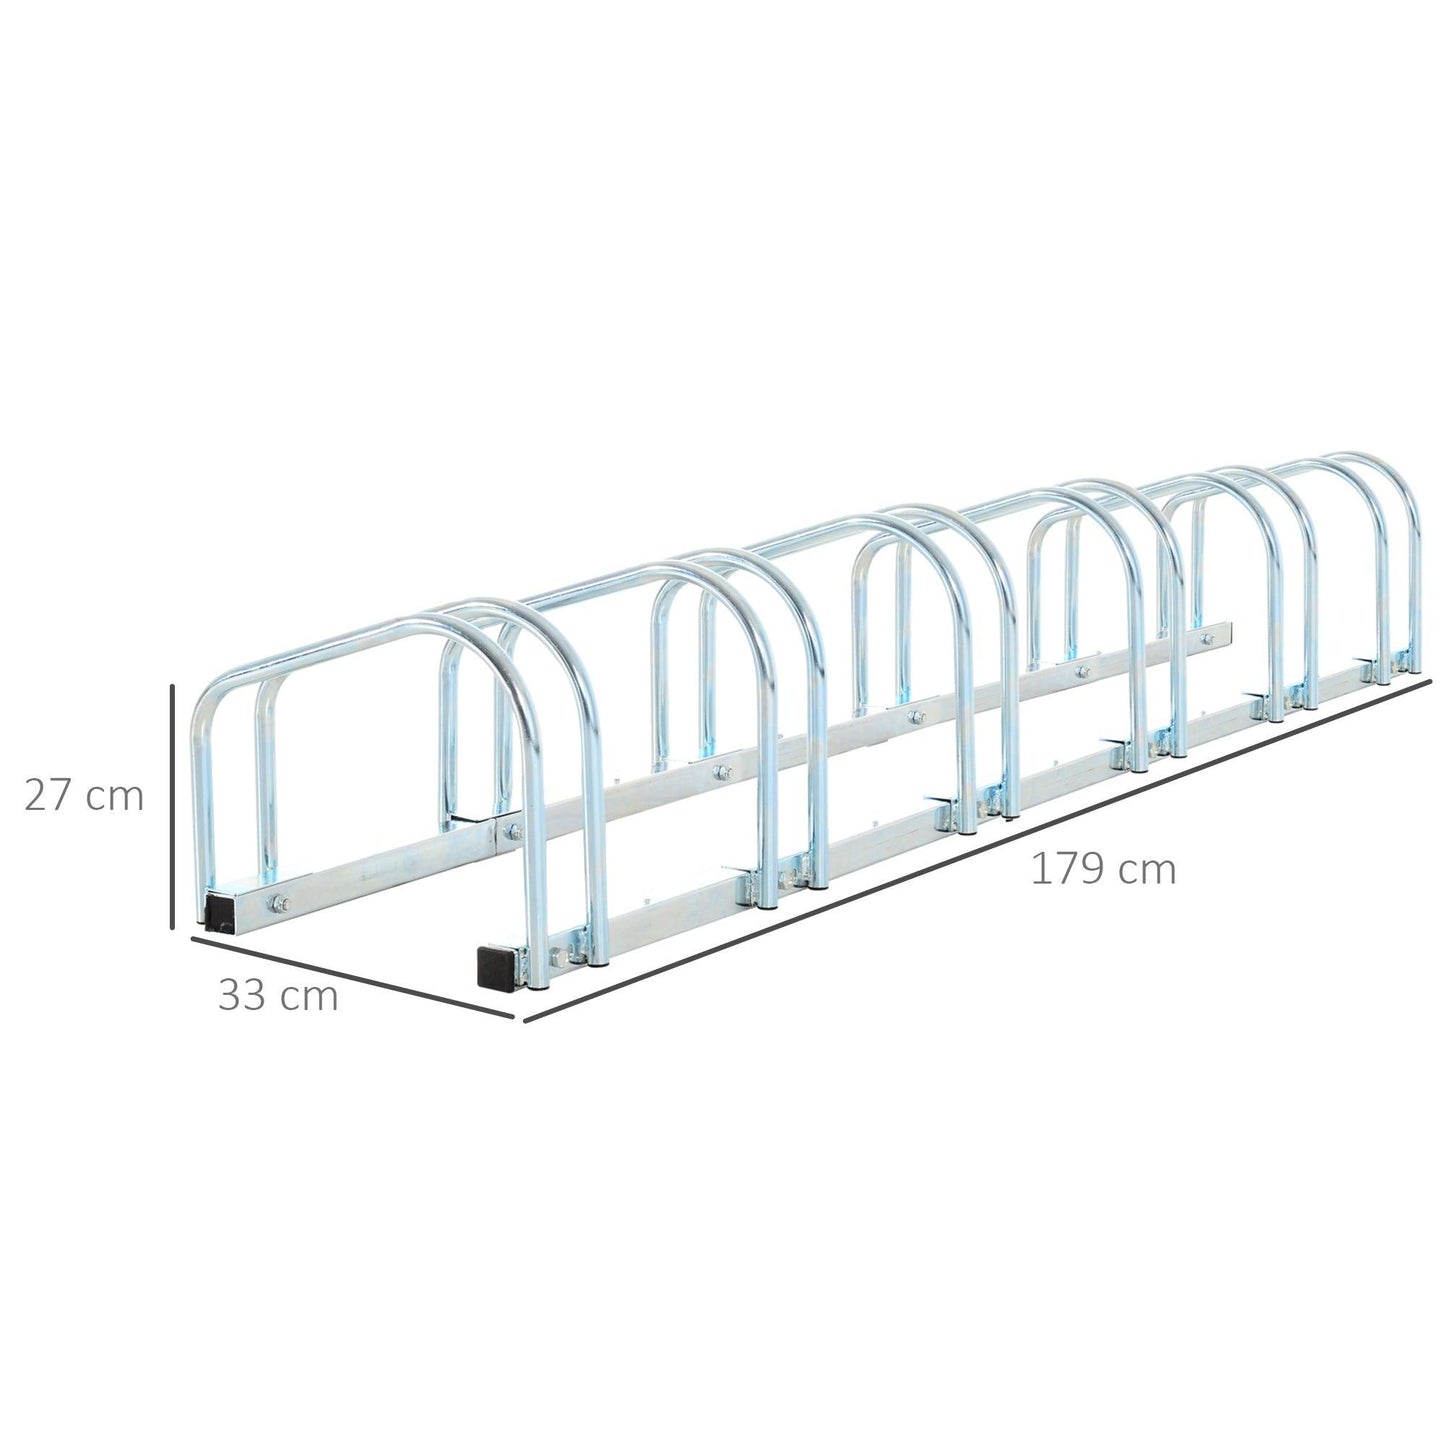 HOMCOM Bike Parking Rack Bicycle Locking Storage Stand for 6 Cycling Silver - ALL4U RETAILER LTD